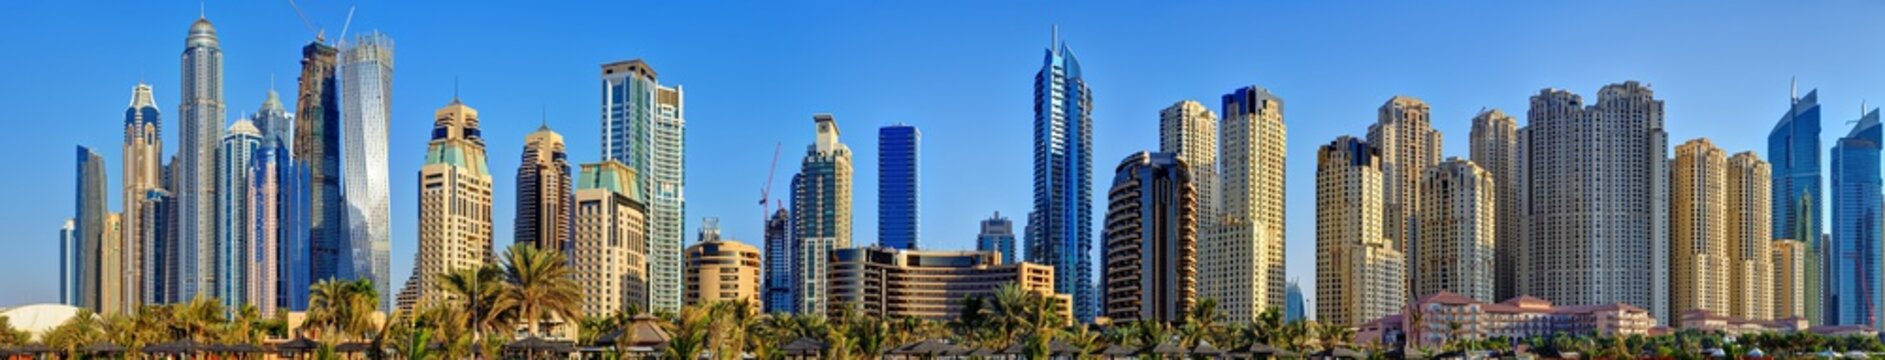 Panorama of of Dubai Marina skyscrapers from Marina beach